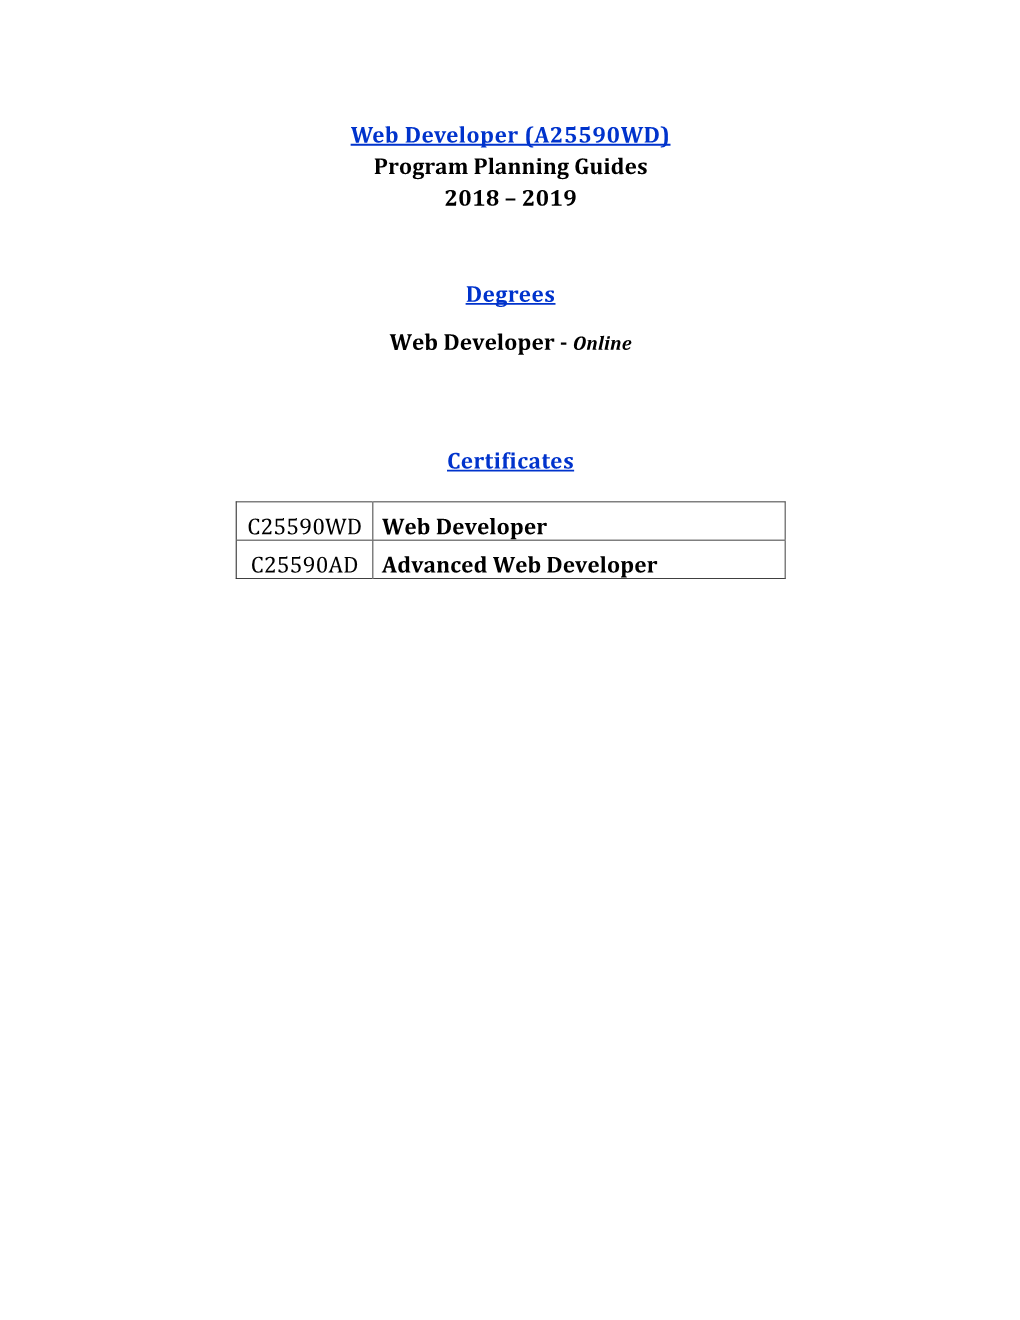 Web Developer (A25590WD) Program Planning Guides 2018 – 2019